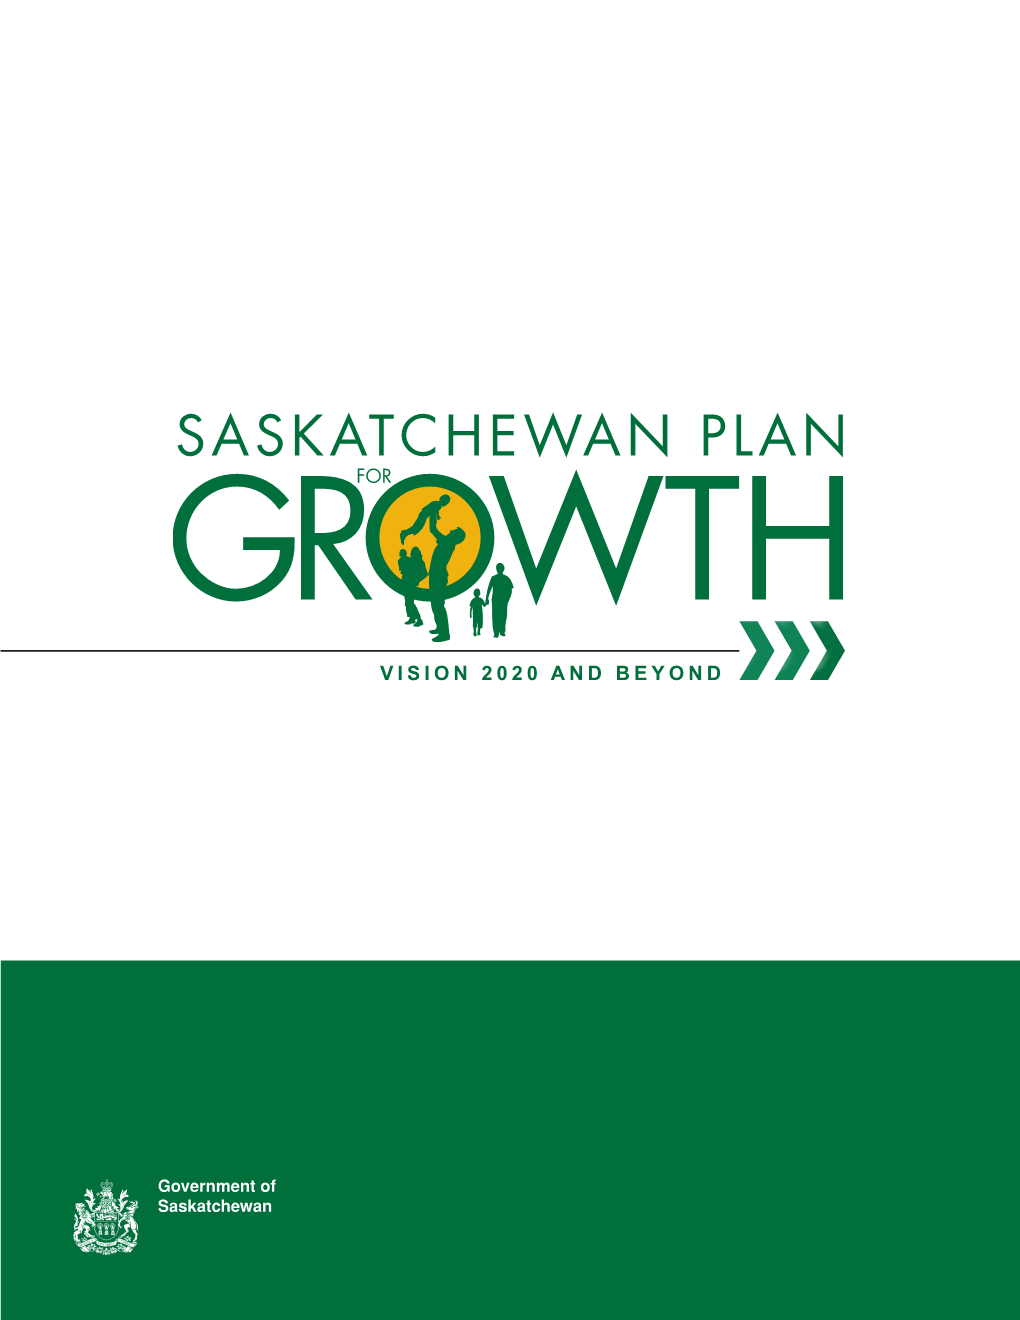 Saskatchewan's Growth Plan